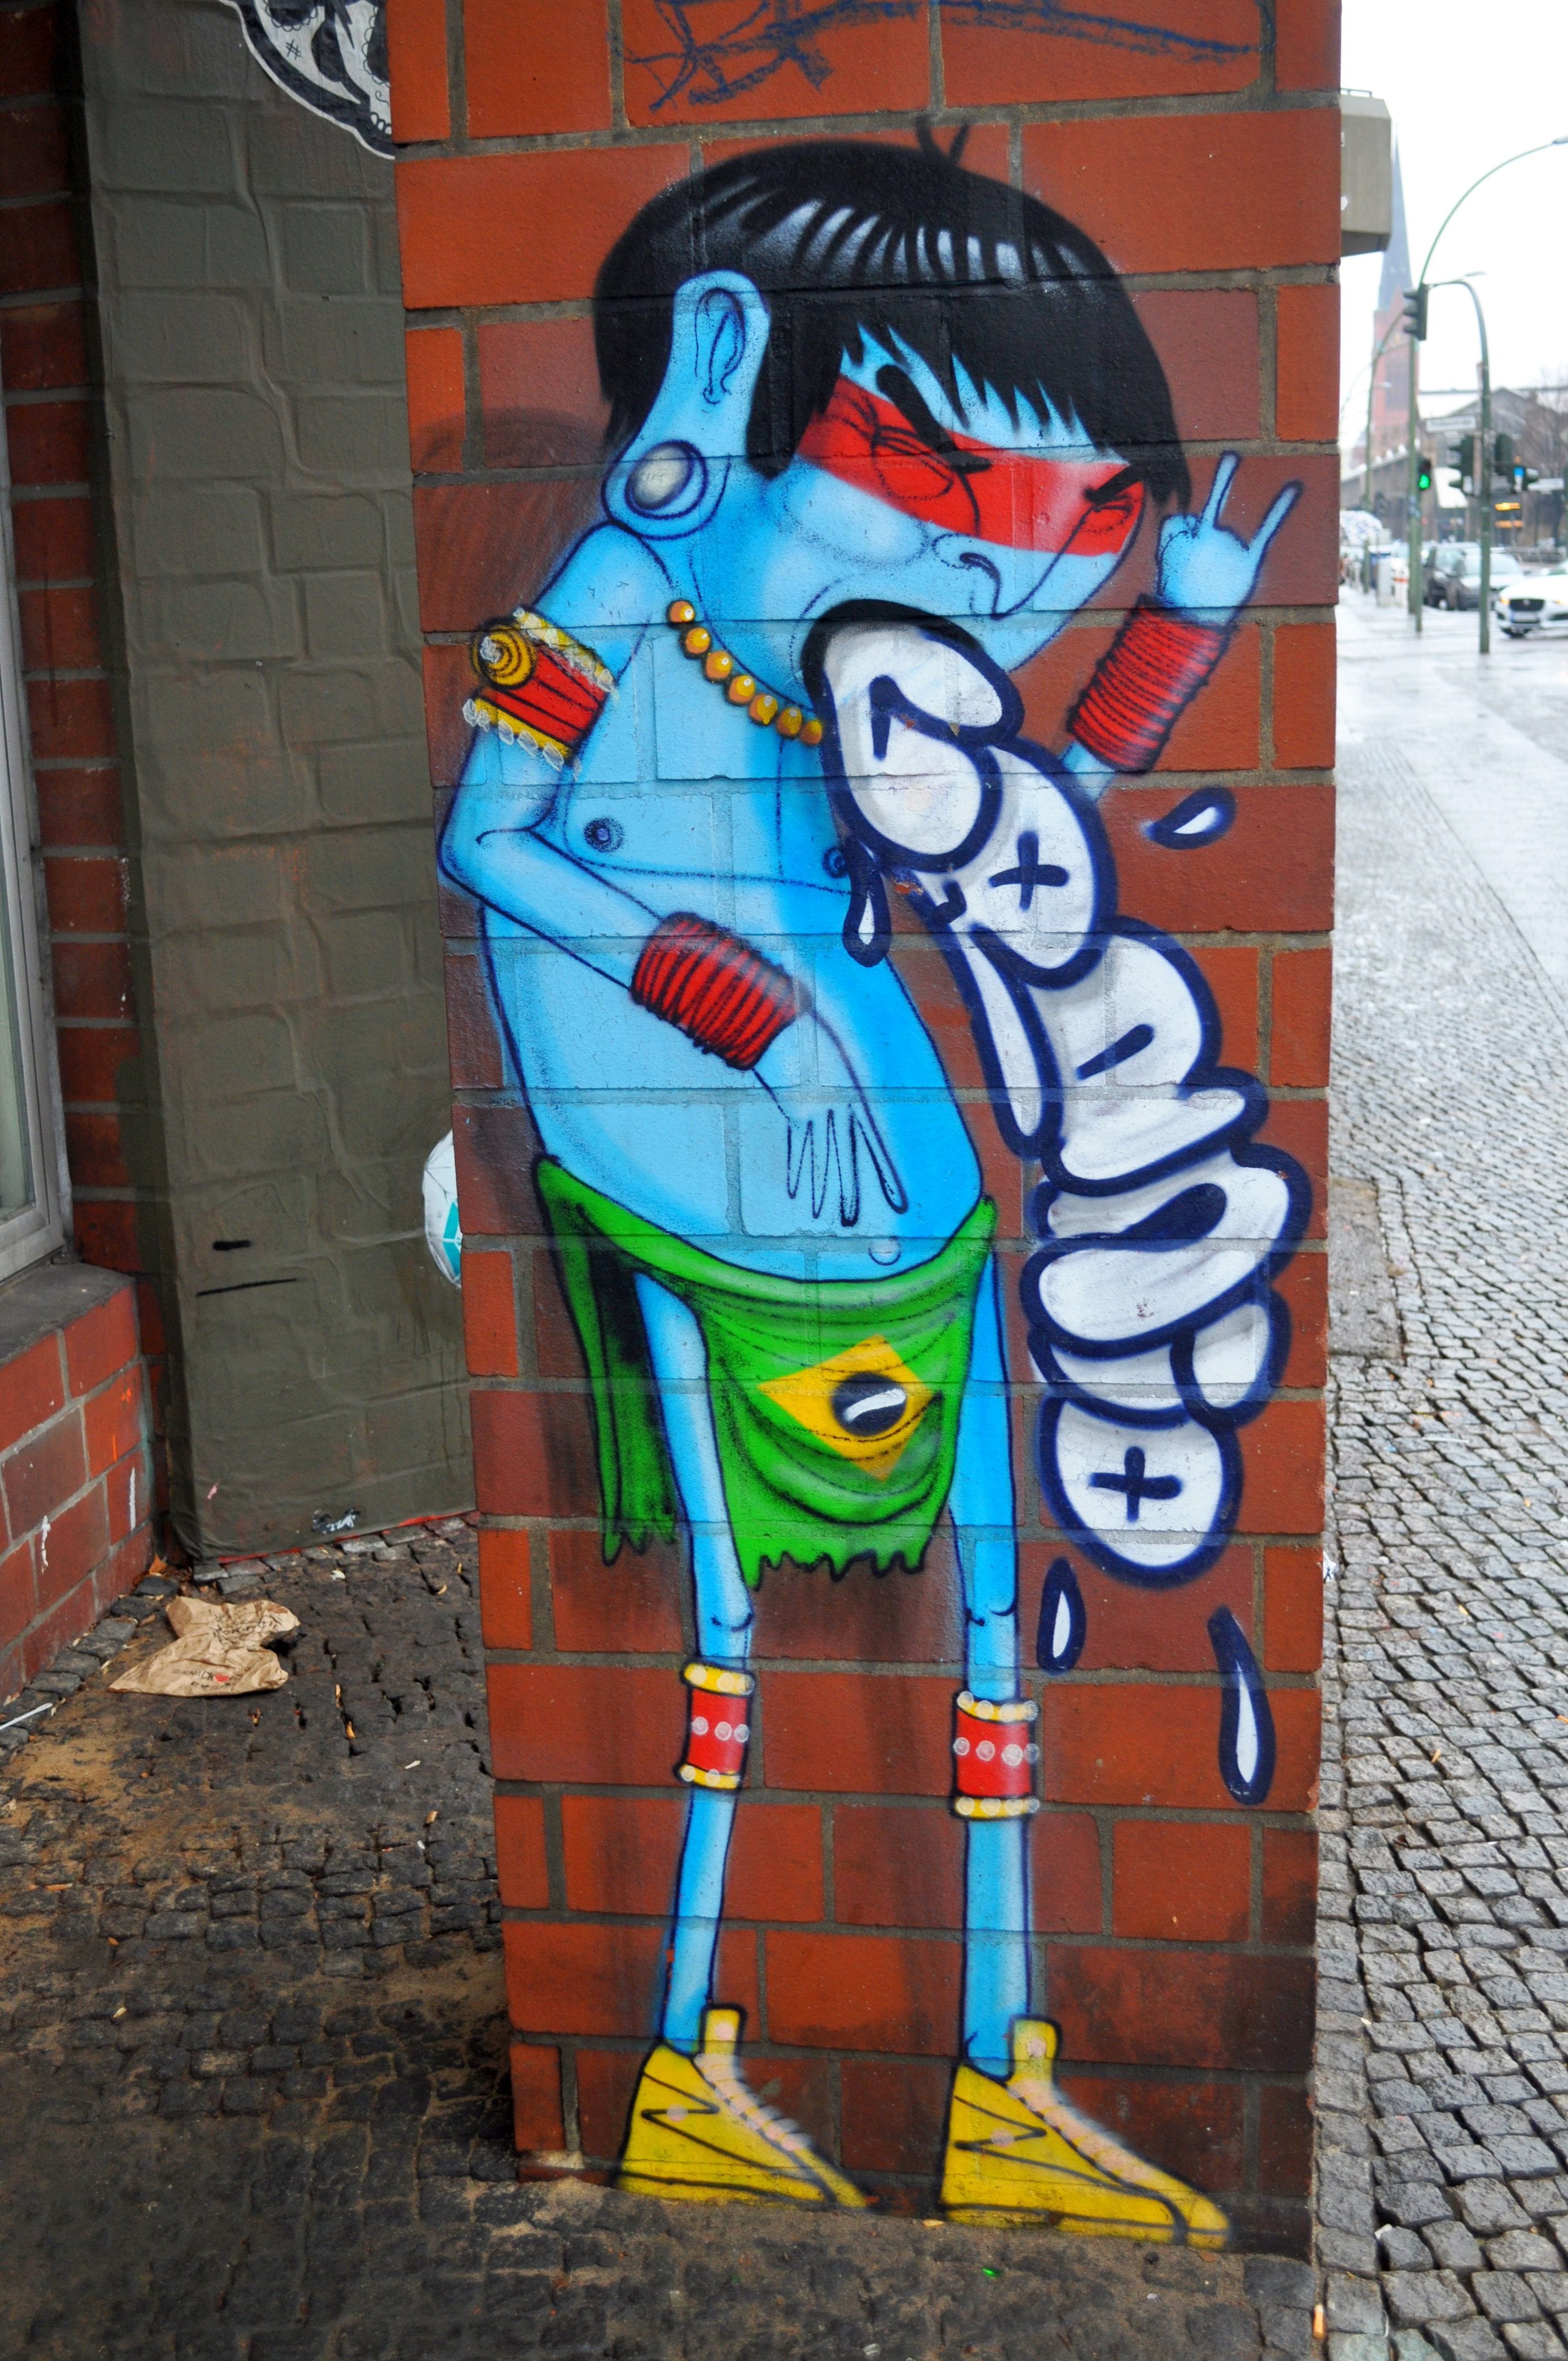 Graffiti 4739  by the artist Cranio captured by elettrotajik in Berlin Germany